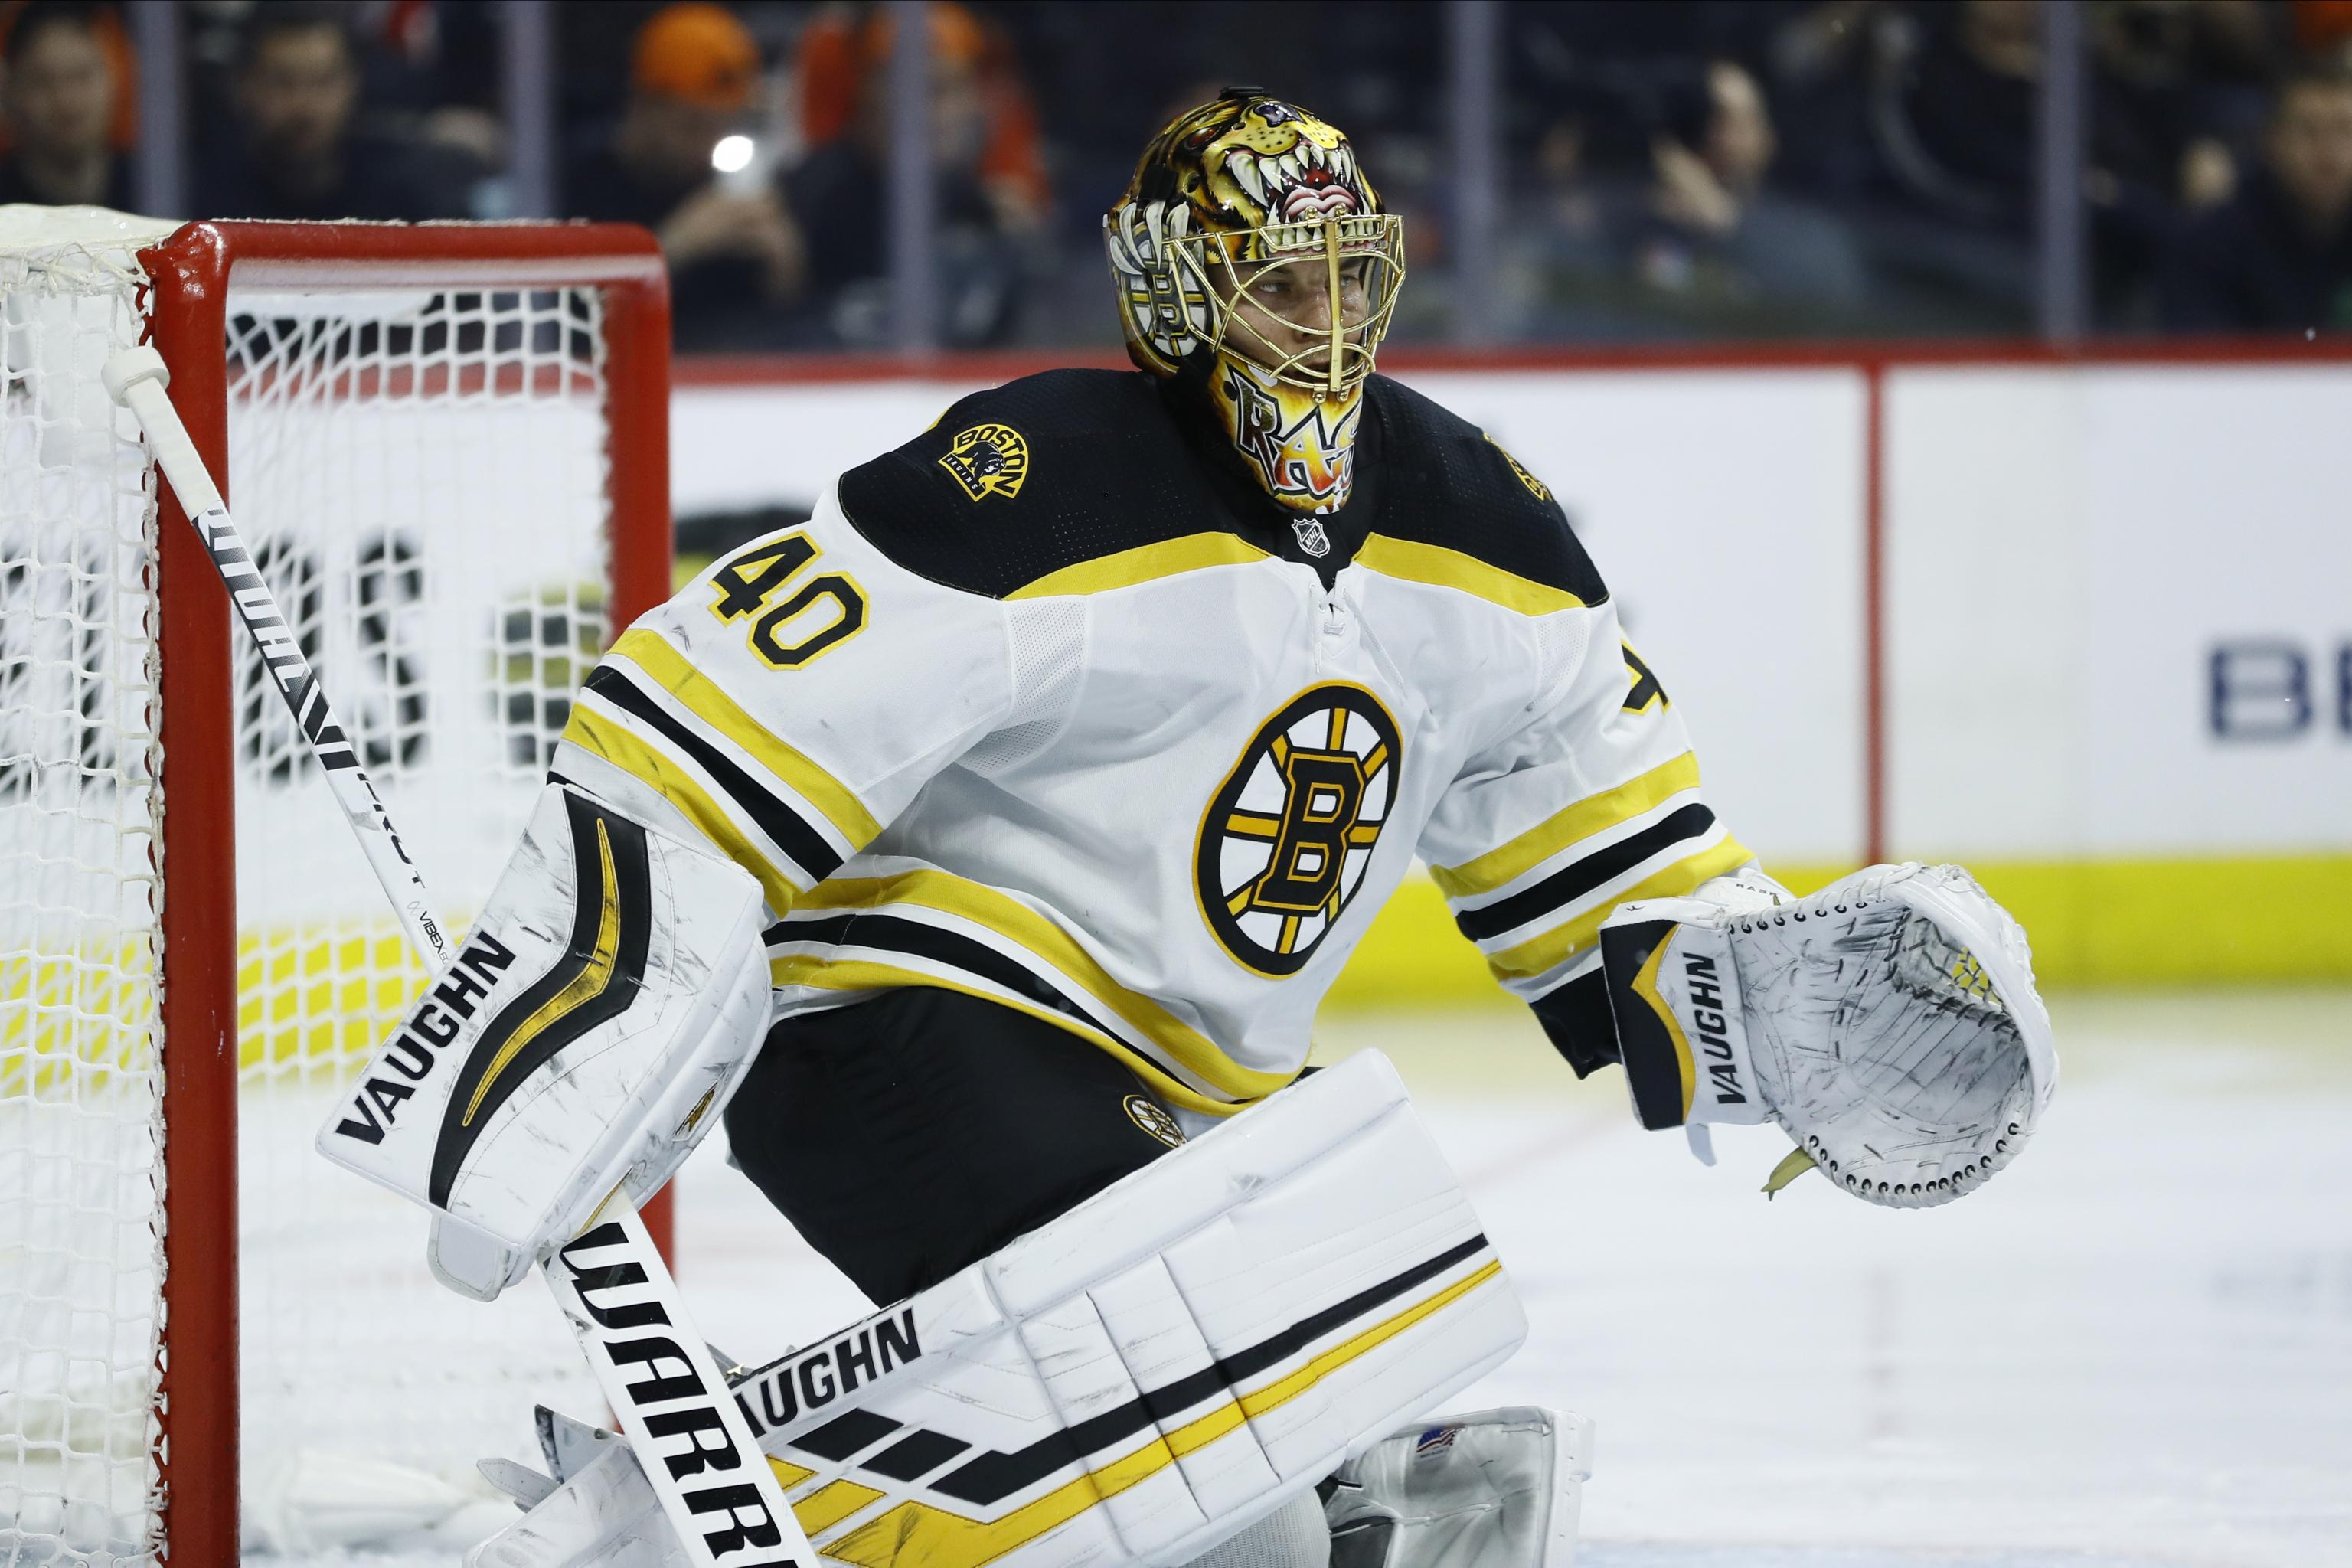 NHL Network ranks Bruins netminder Tuukka Rask as fifth-best